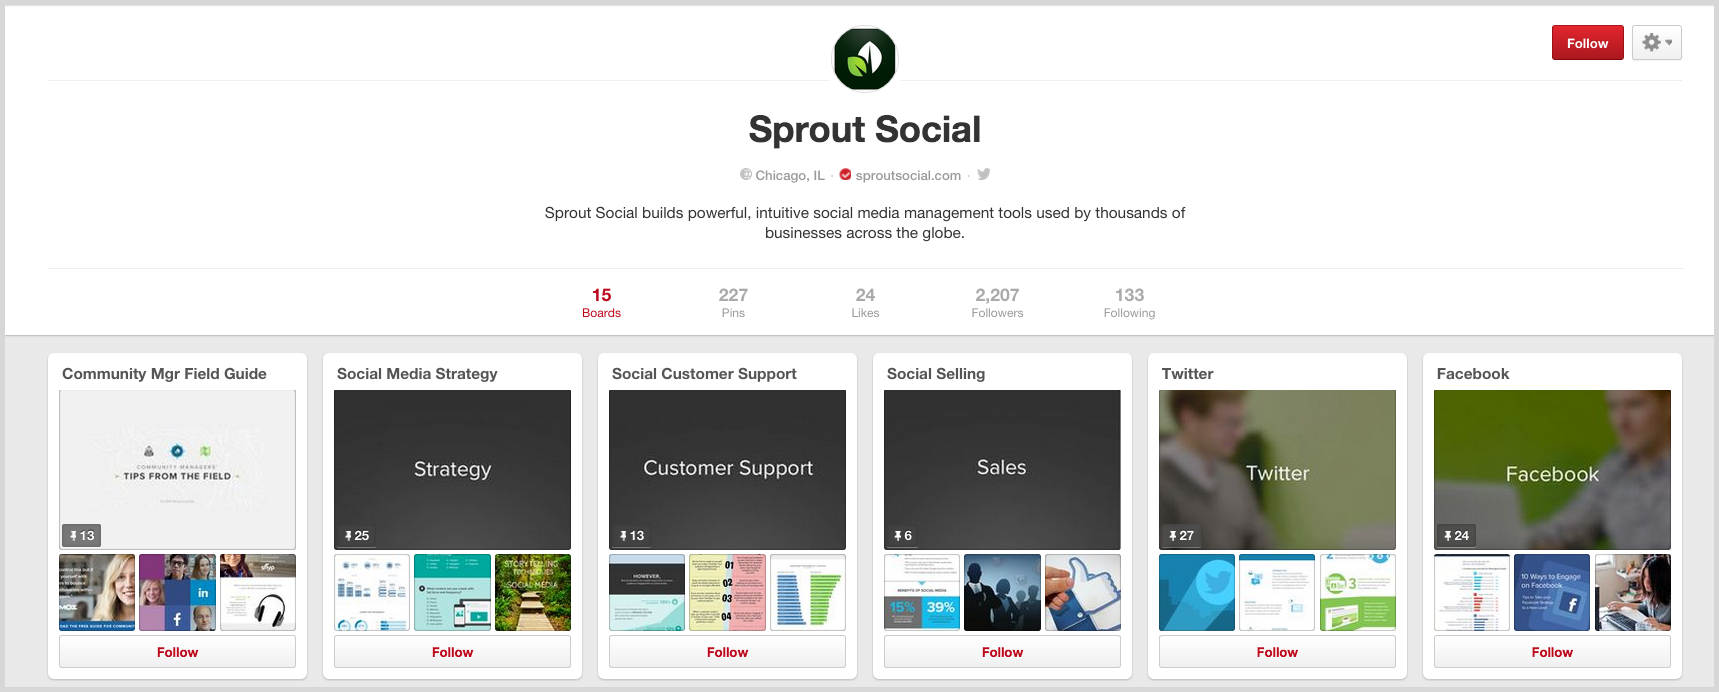 Sproutsocial screenshot for social media content 2